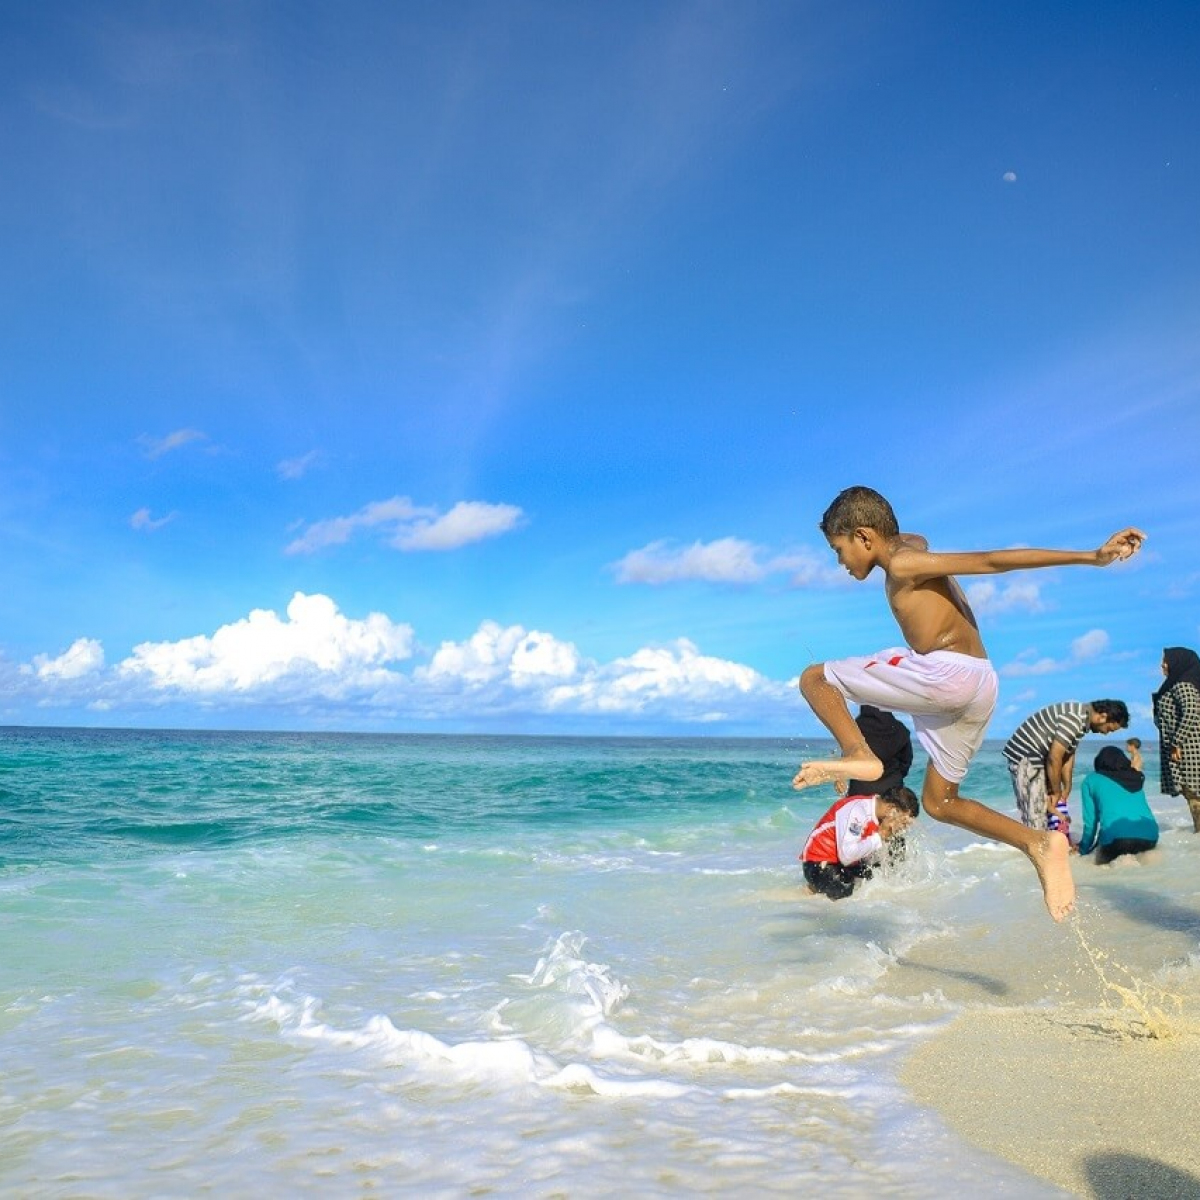 Мальдивы плюсы и минусы отдыха. Пляж Thundi. Caribbean Travel. Косметичні новинки для літа і відпустки. Local island